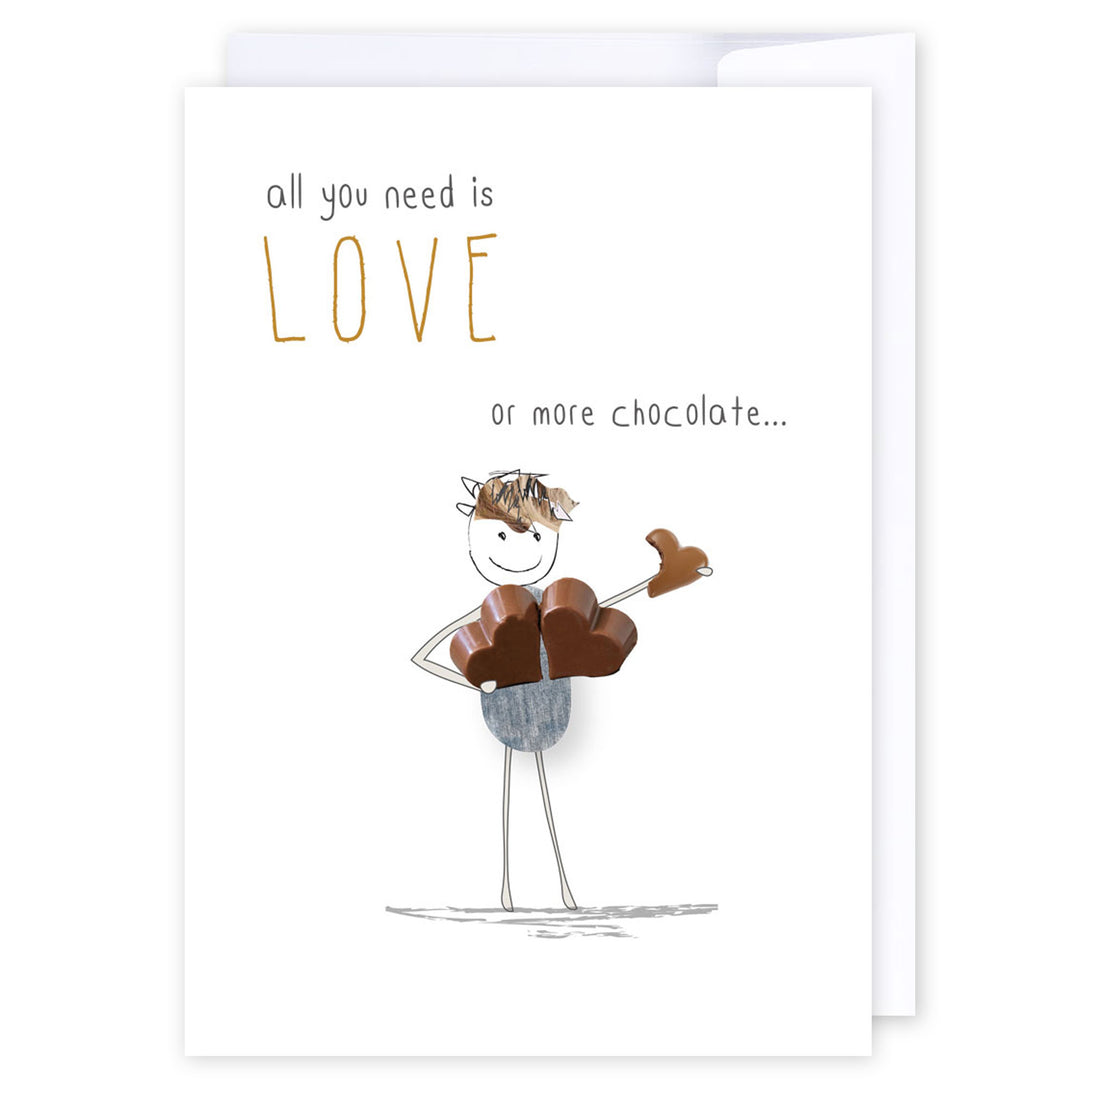 Love and chocolate